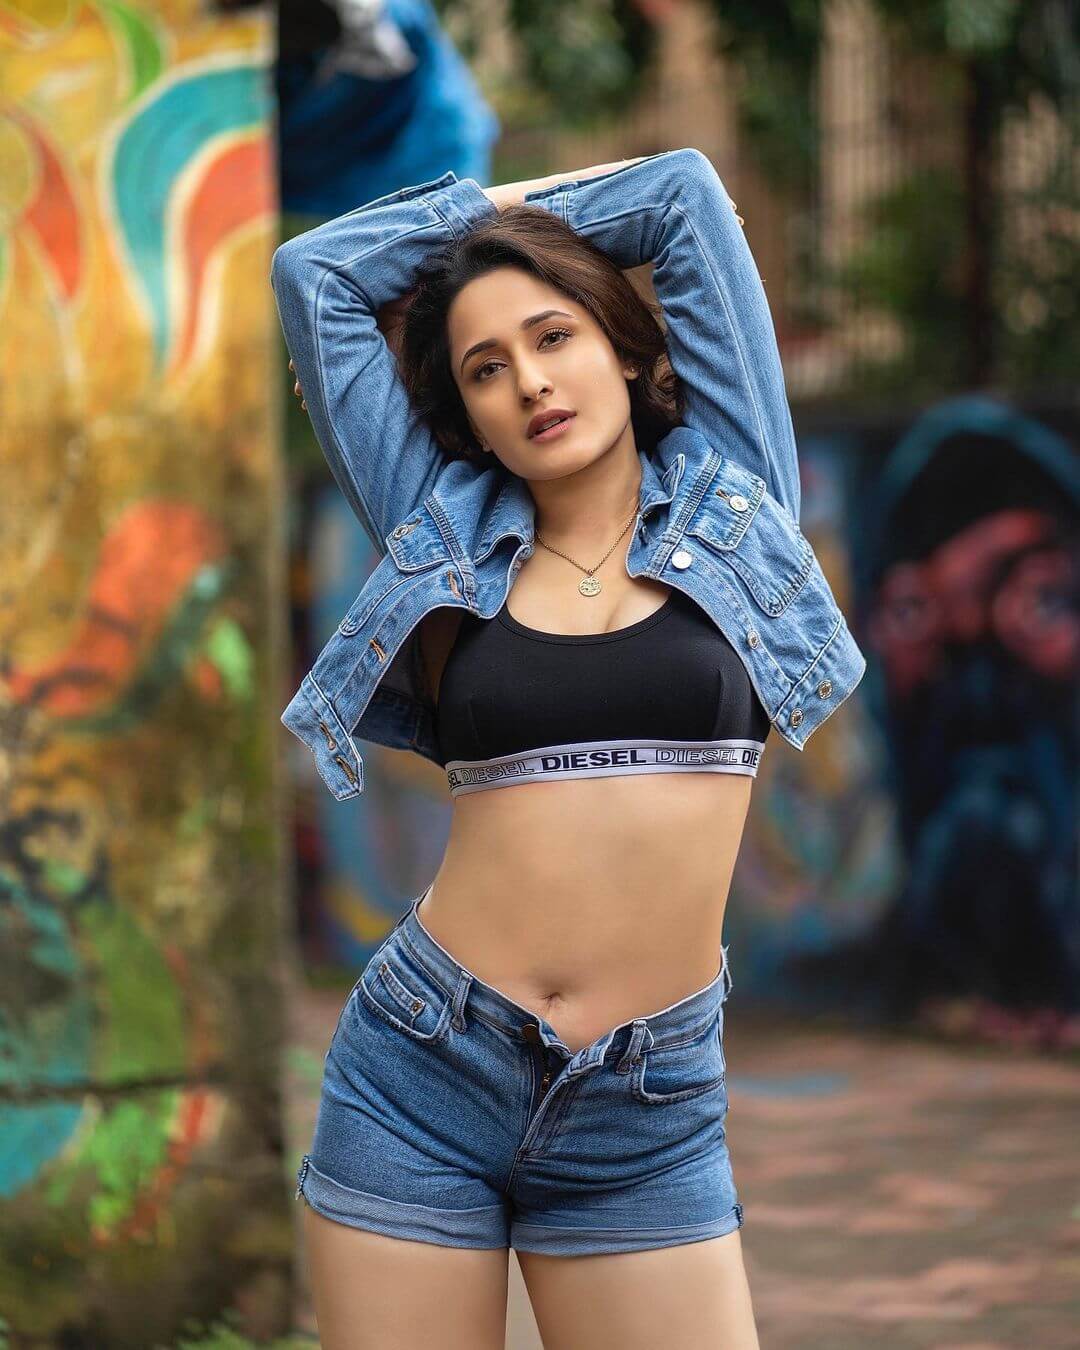 Pragya Jaiswal in sexy black sport bra and blue shorts